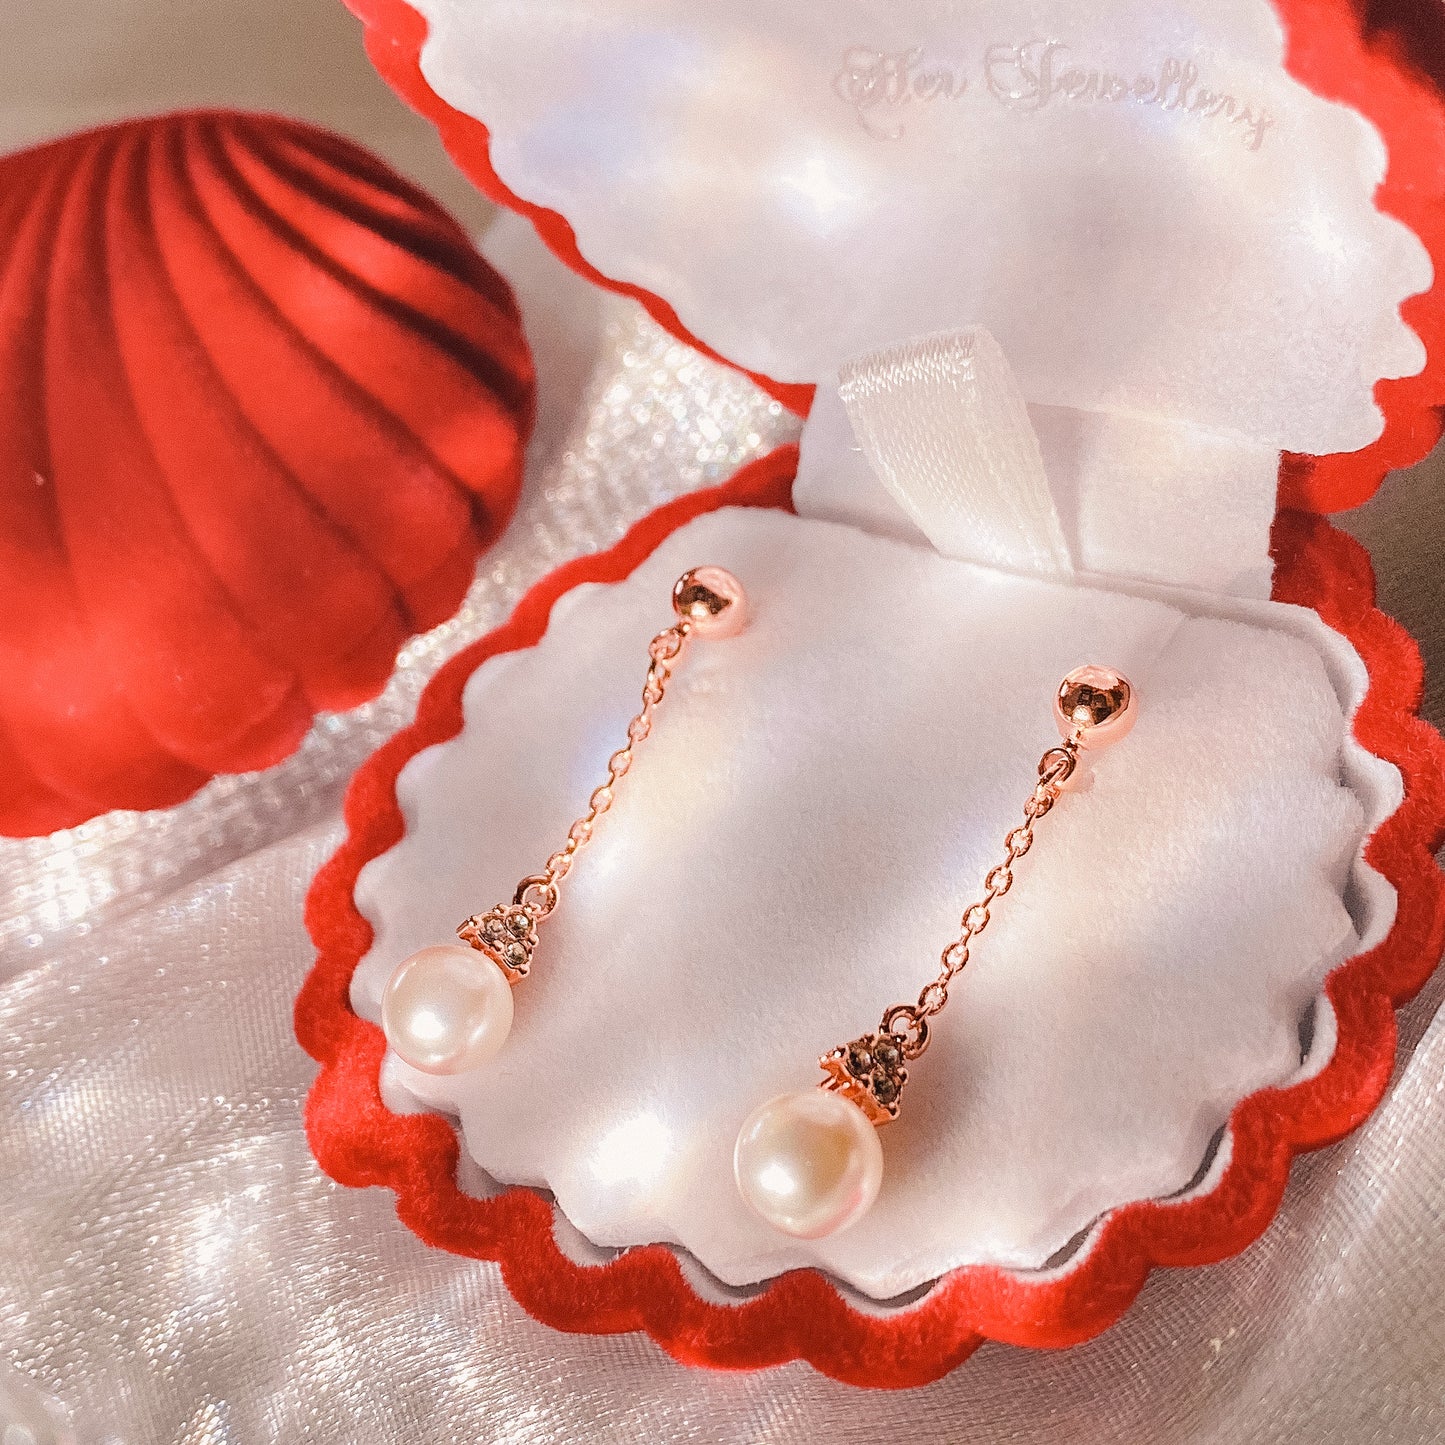 Dangling Elegant Pearl Earrings